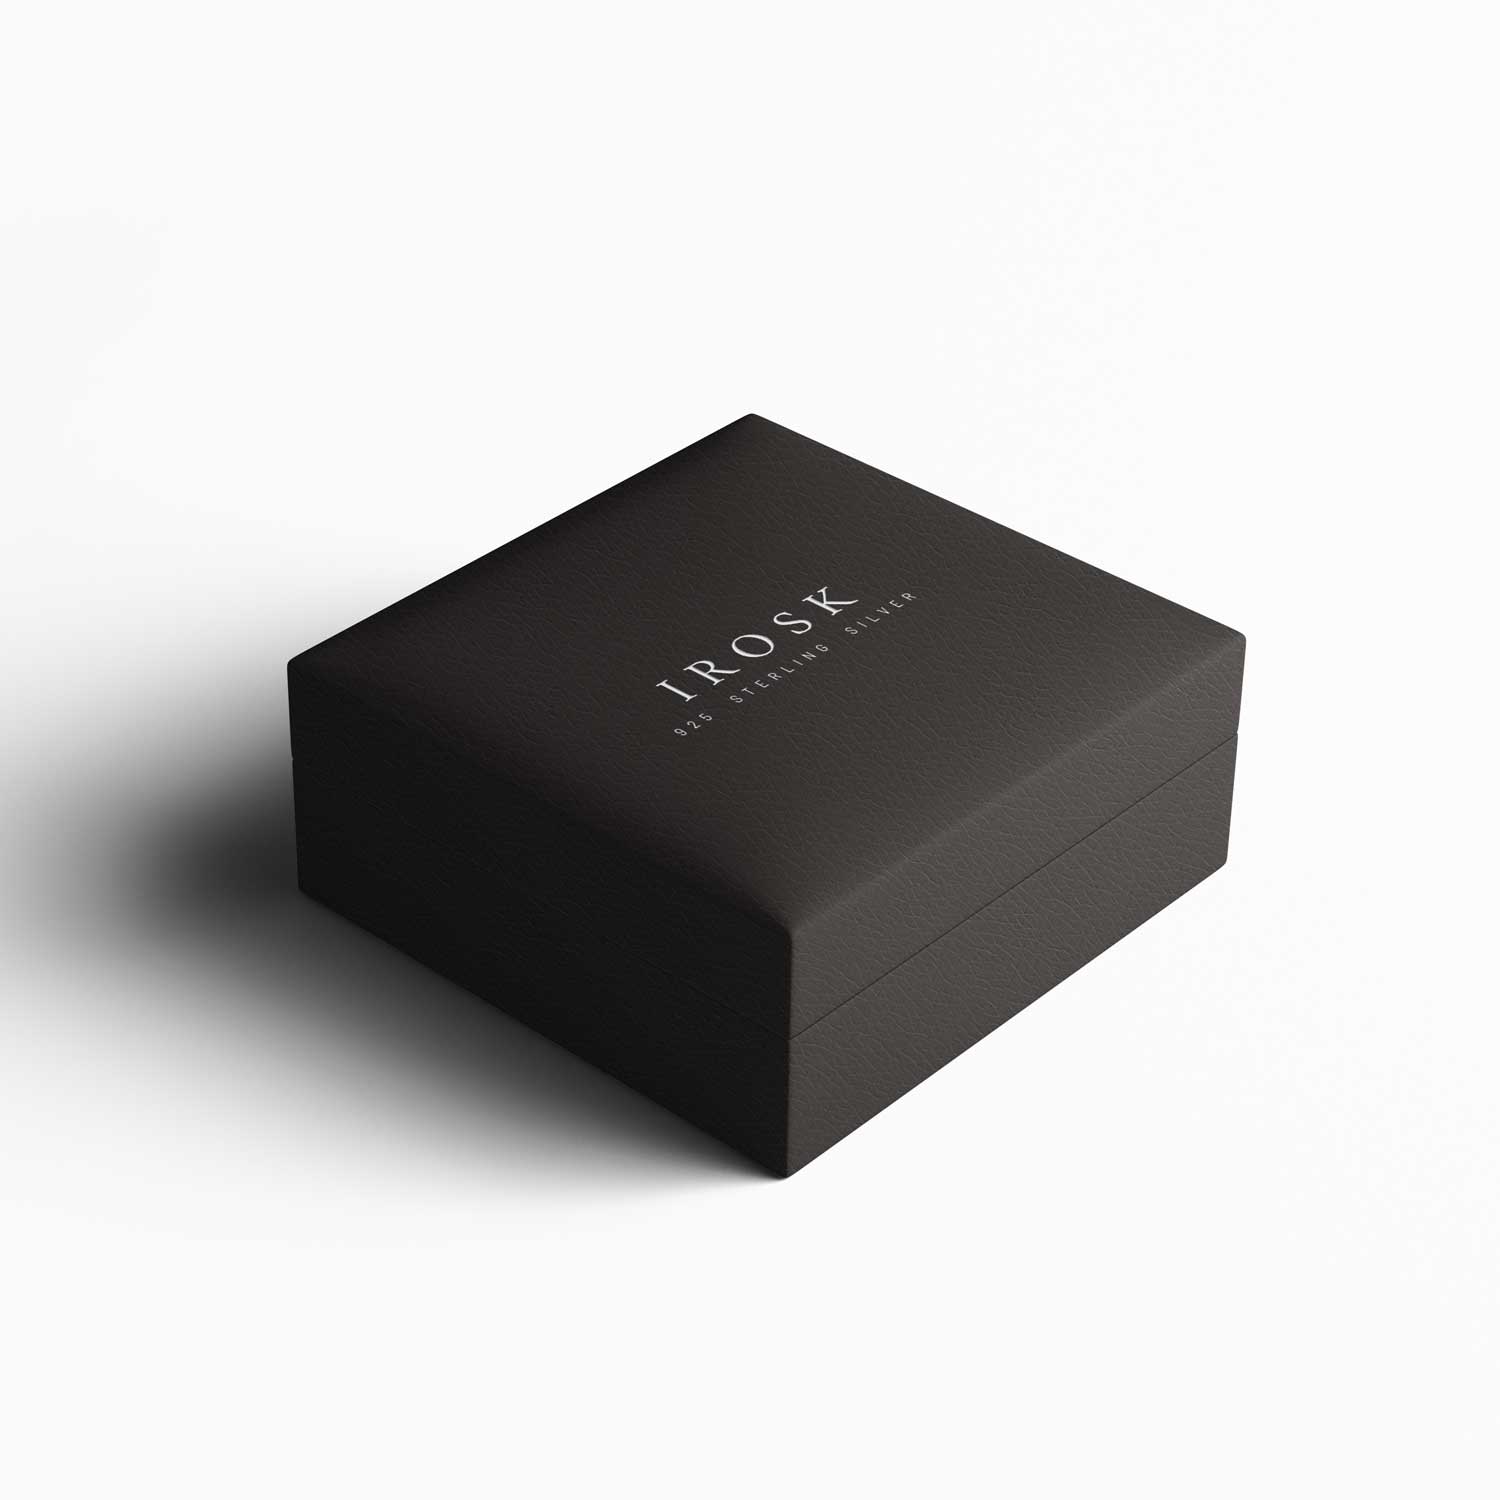 Irosk jewelry box accompanying the Alexandrite Sparkle Pendant, adding luxury presentation.